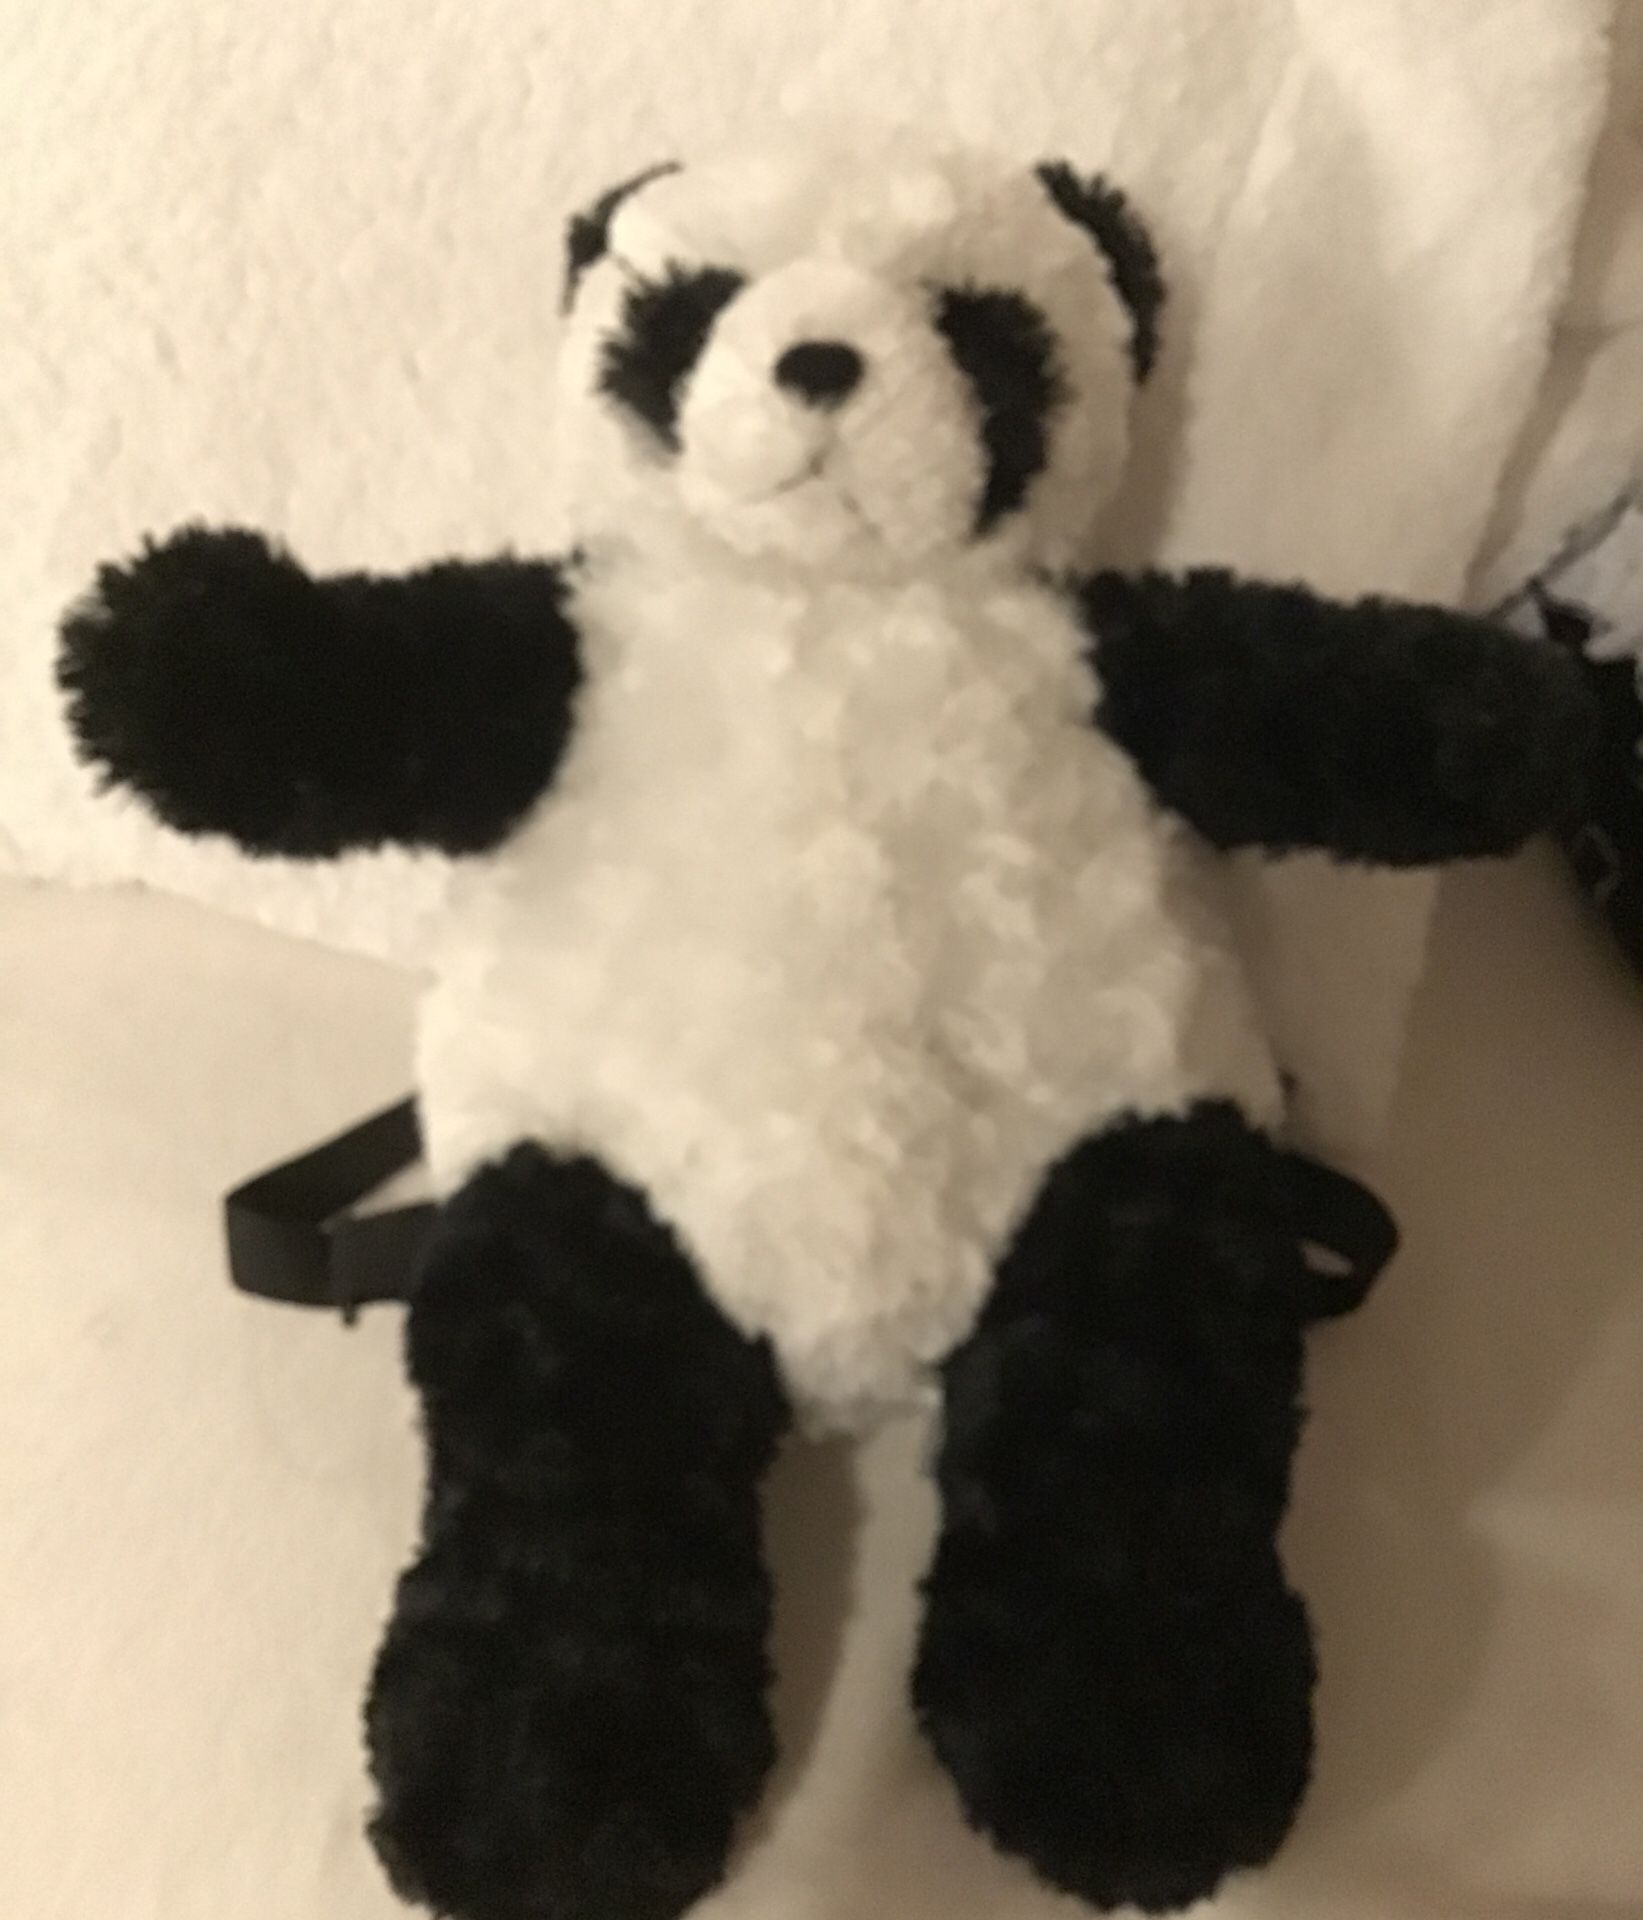 Panda stuffed animal backpack from San Diego zoo